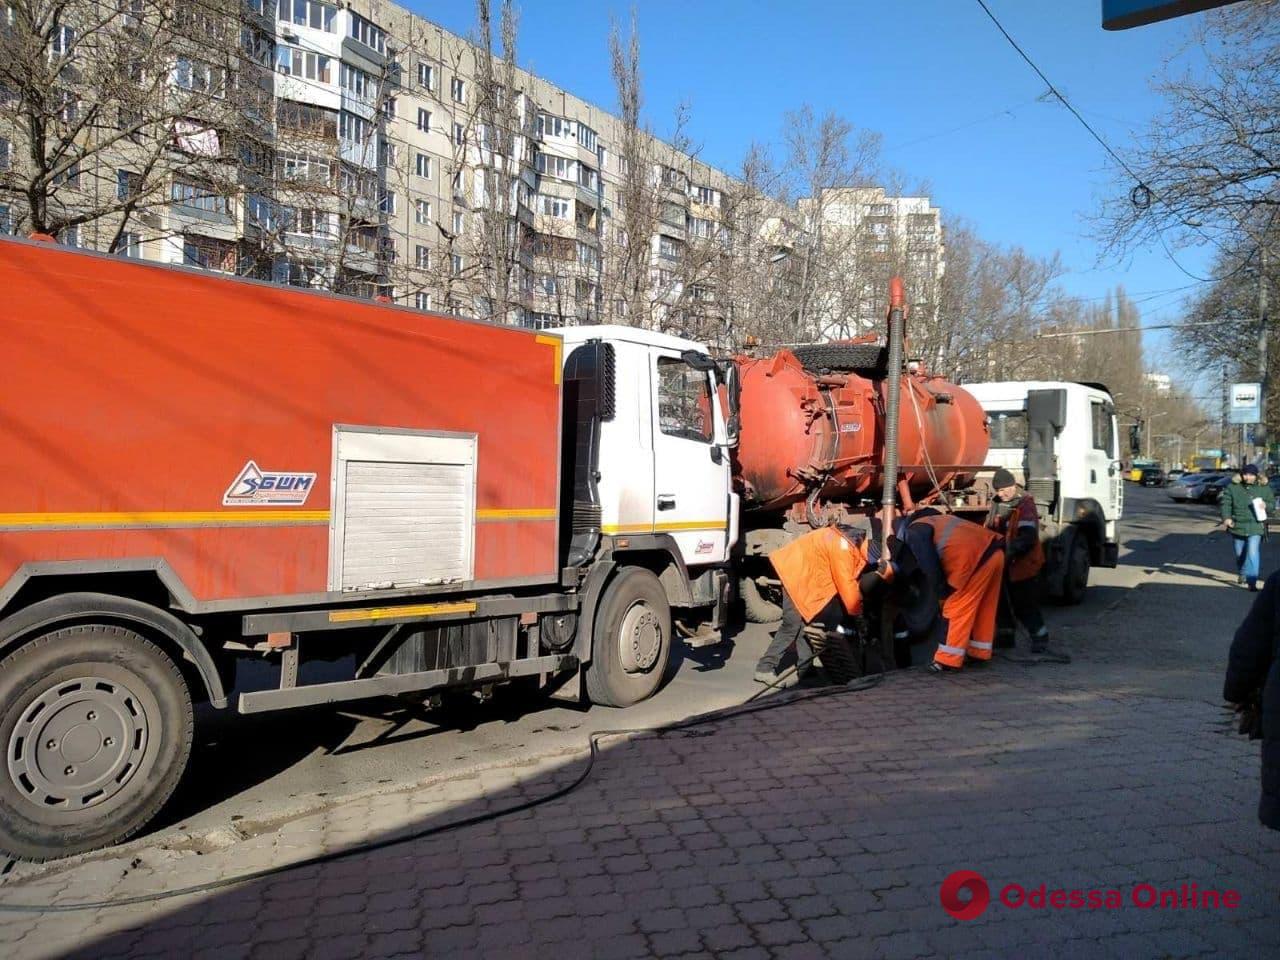 Планируйте маршрут заранее: где в Одессе чистят дождеприемники